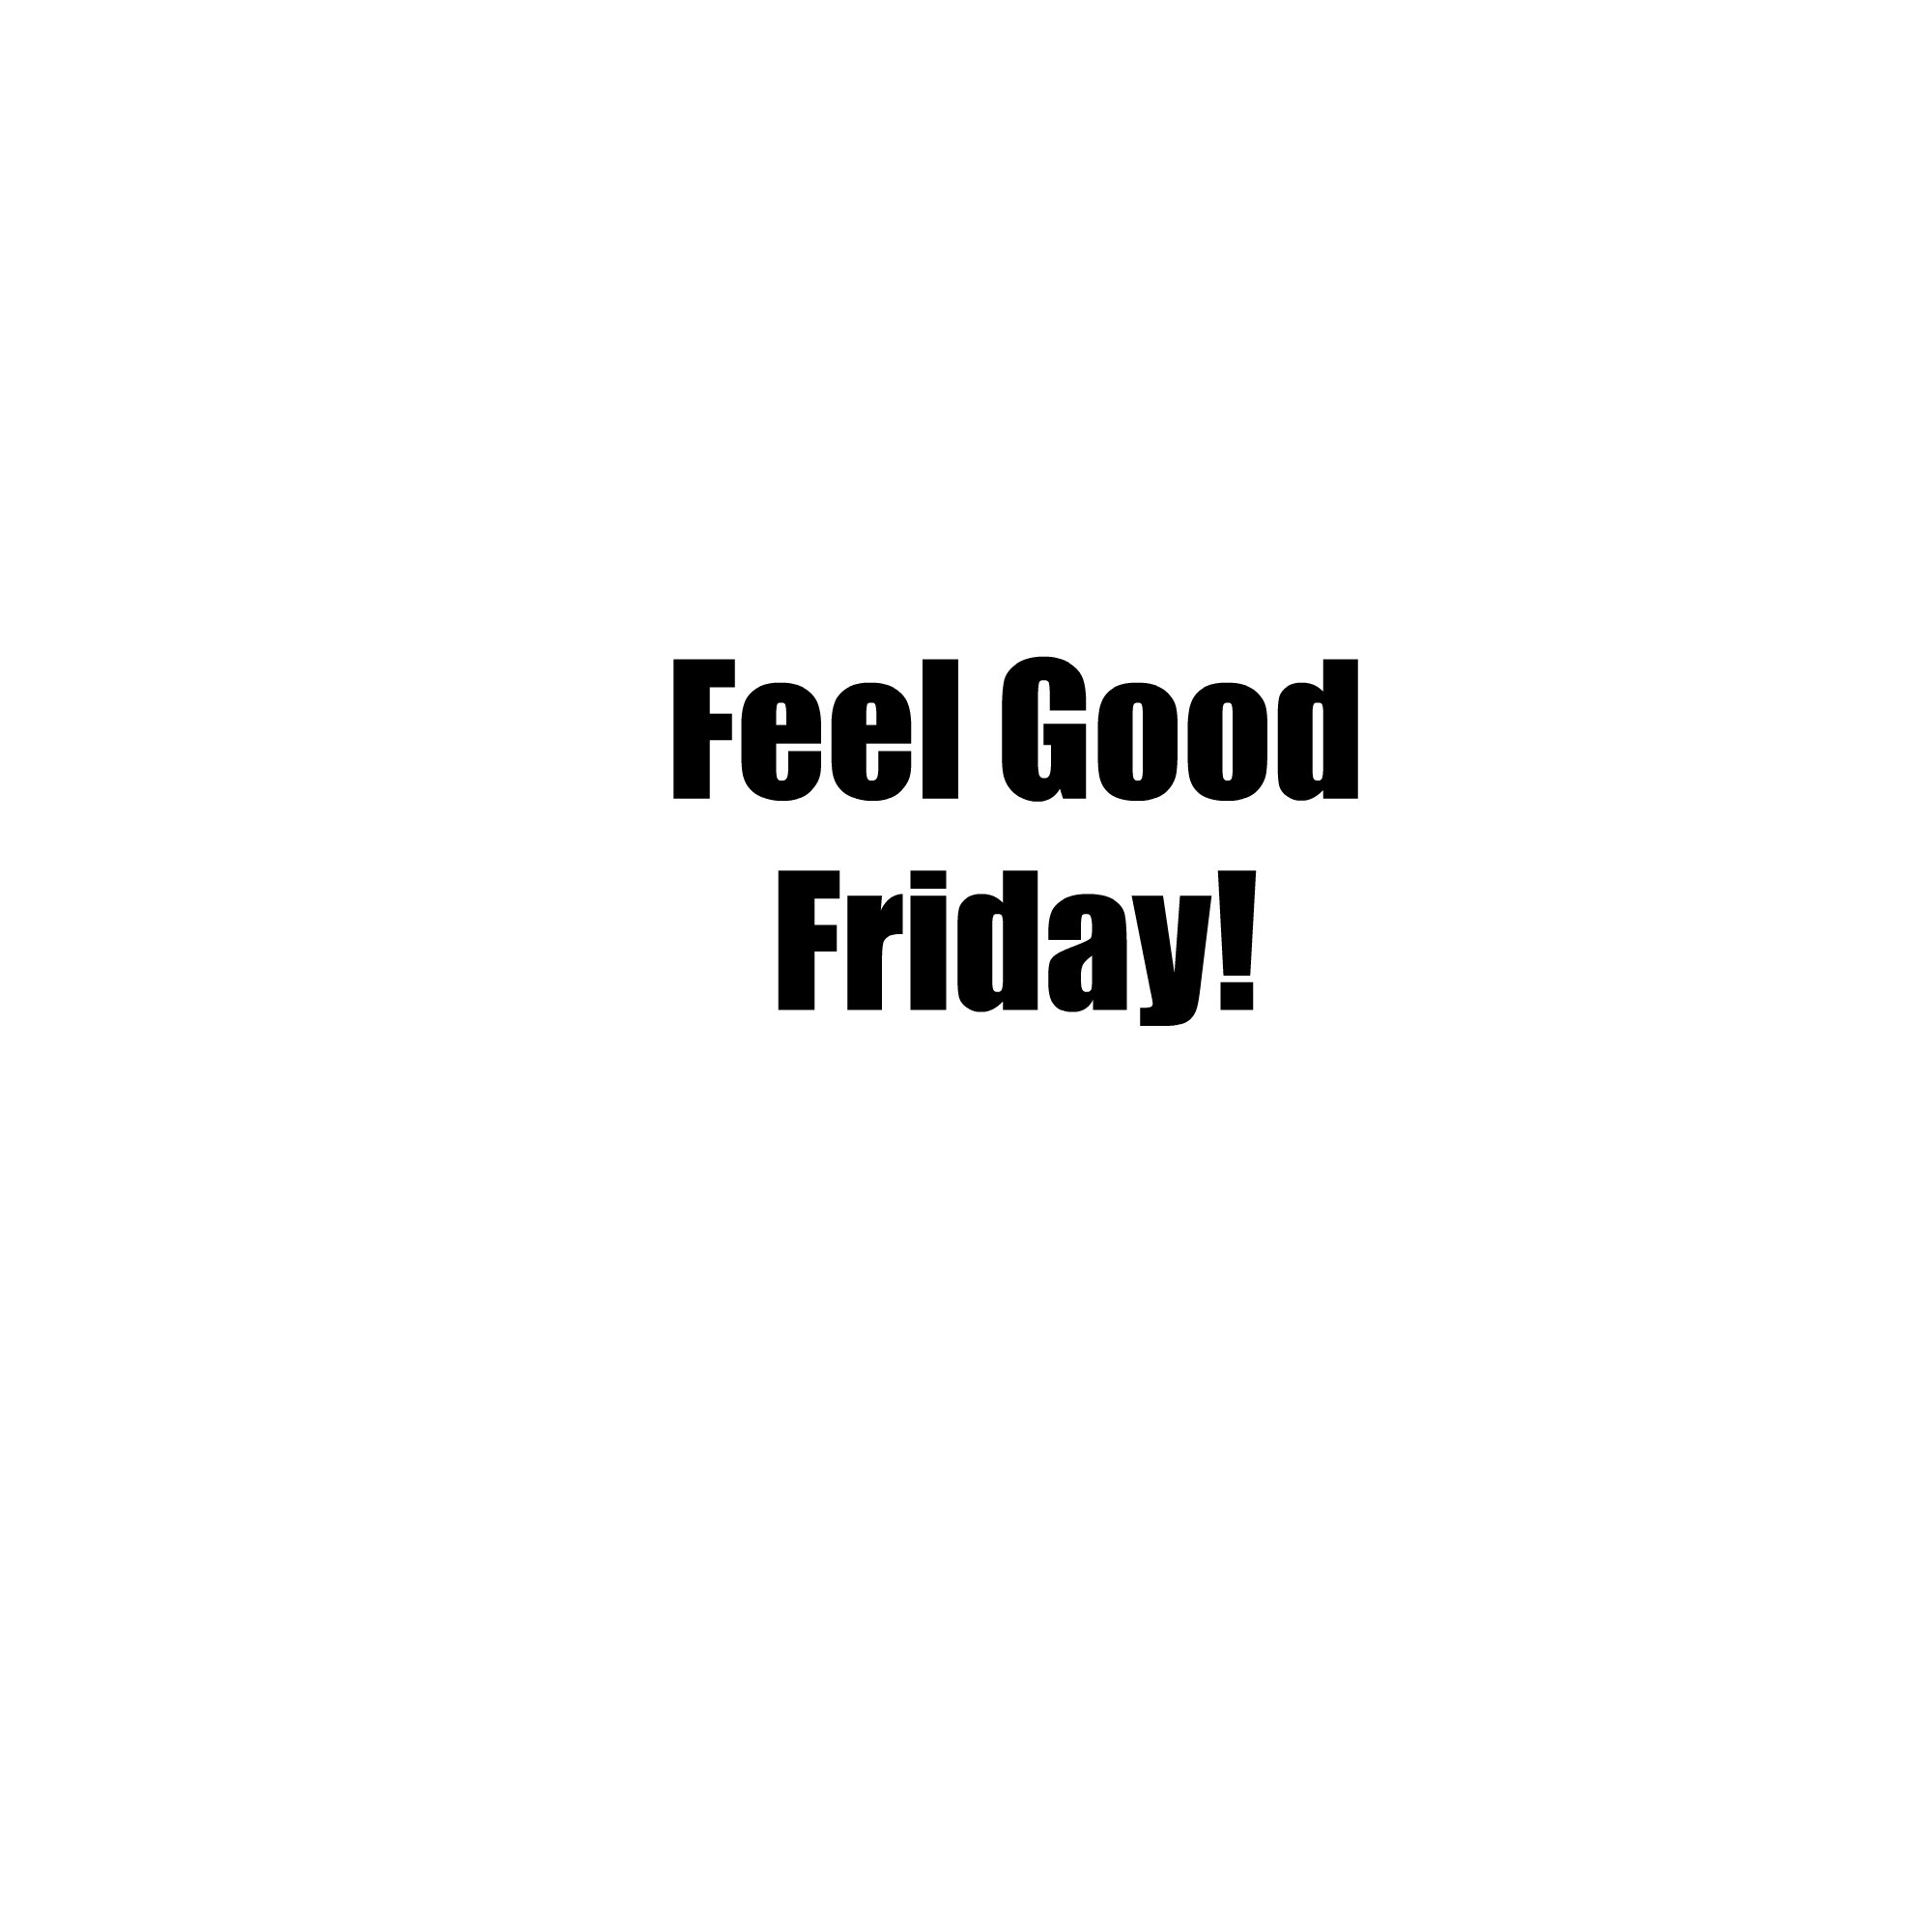 Tony Robbins Saves Soup Kitchen- Feel Good Friday